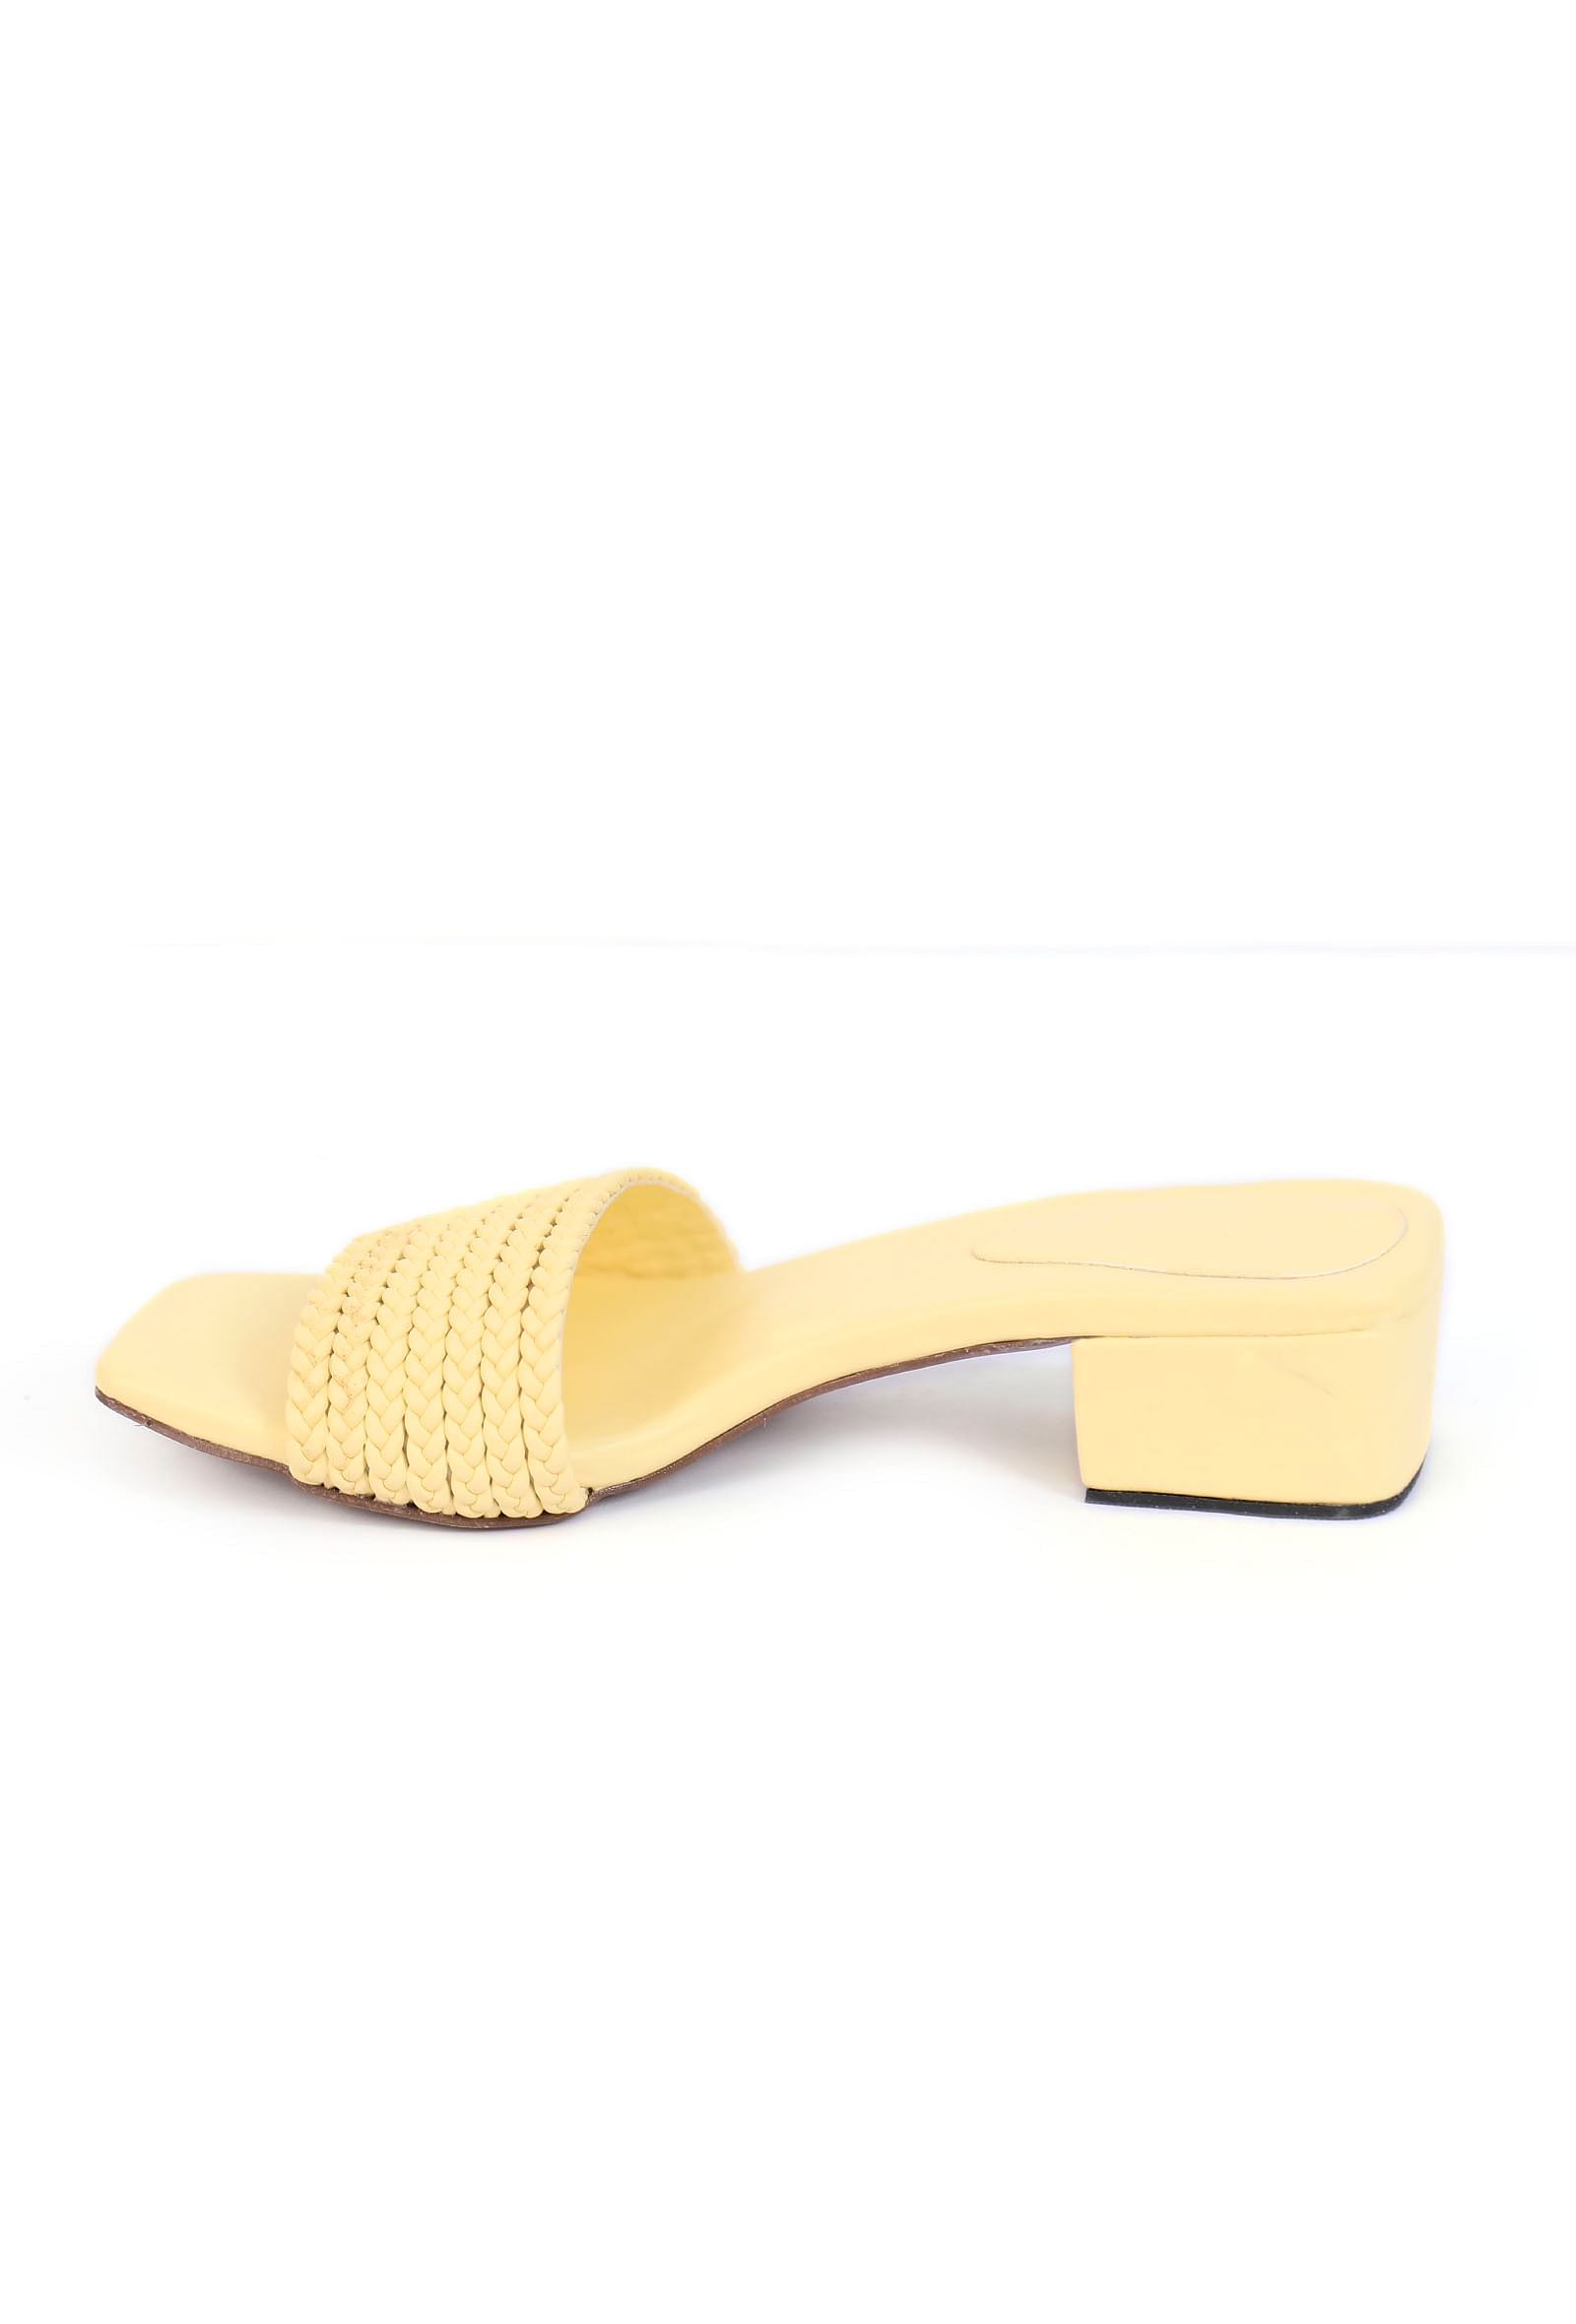 Vintage Lemon Yellow Patent Leather High Stiletto Heel Peep Toe Women Pumps  Shoes / Size EU 39 1/2 Miu Miu / Made in Italy - Etsy